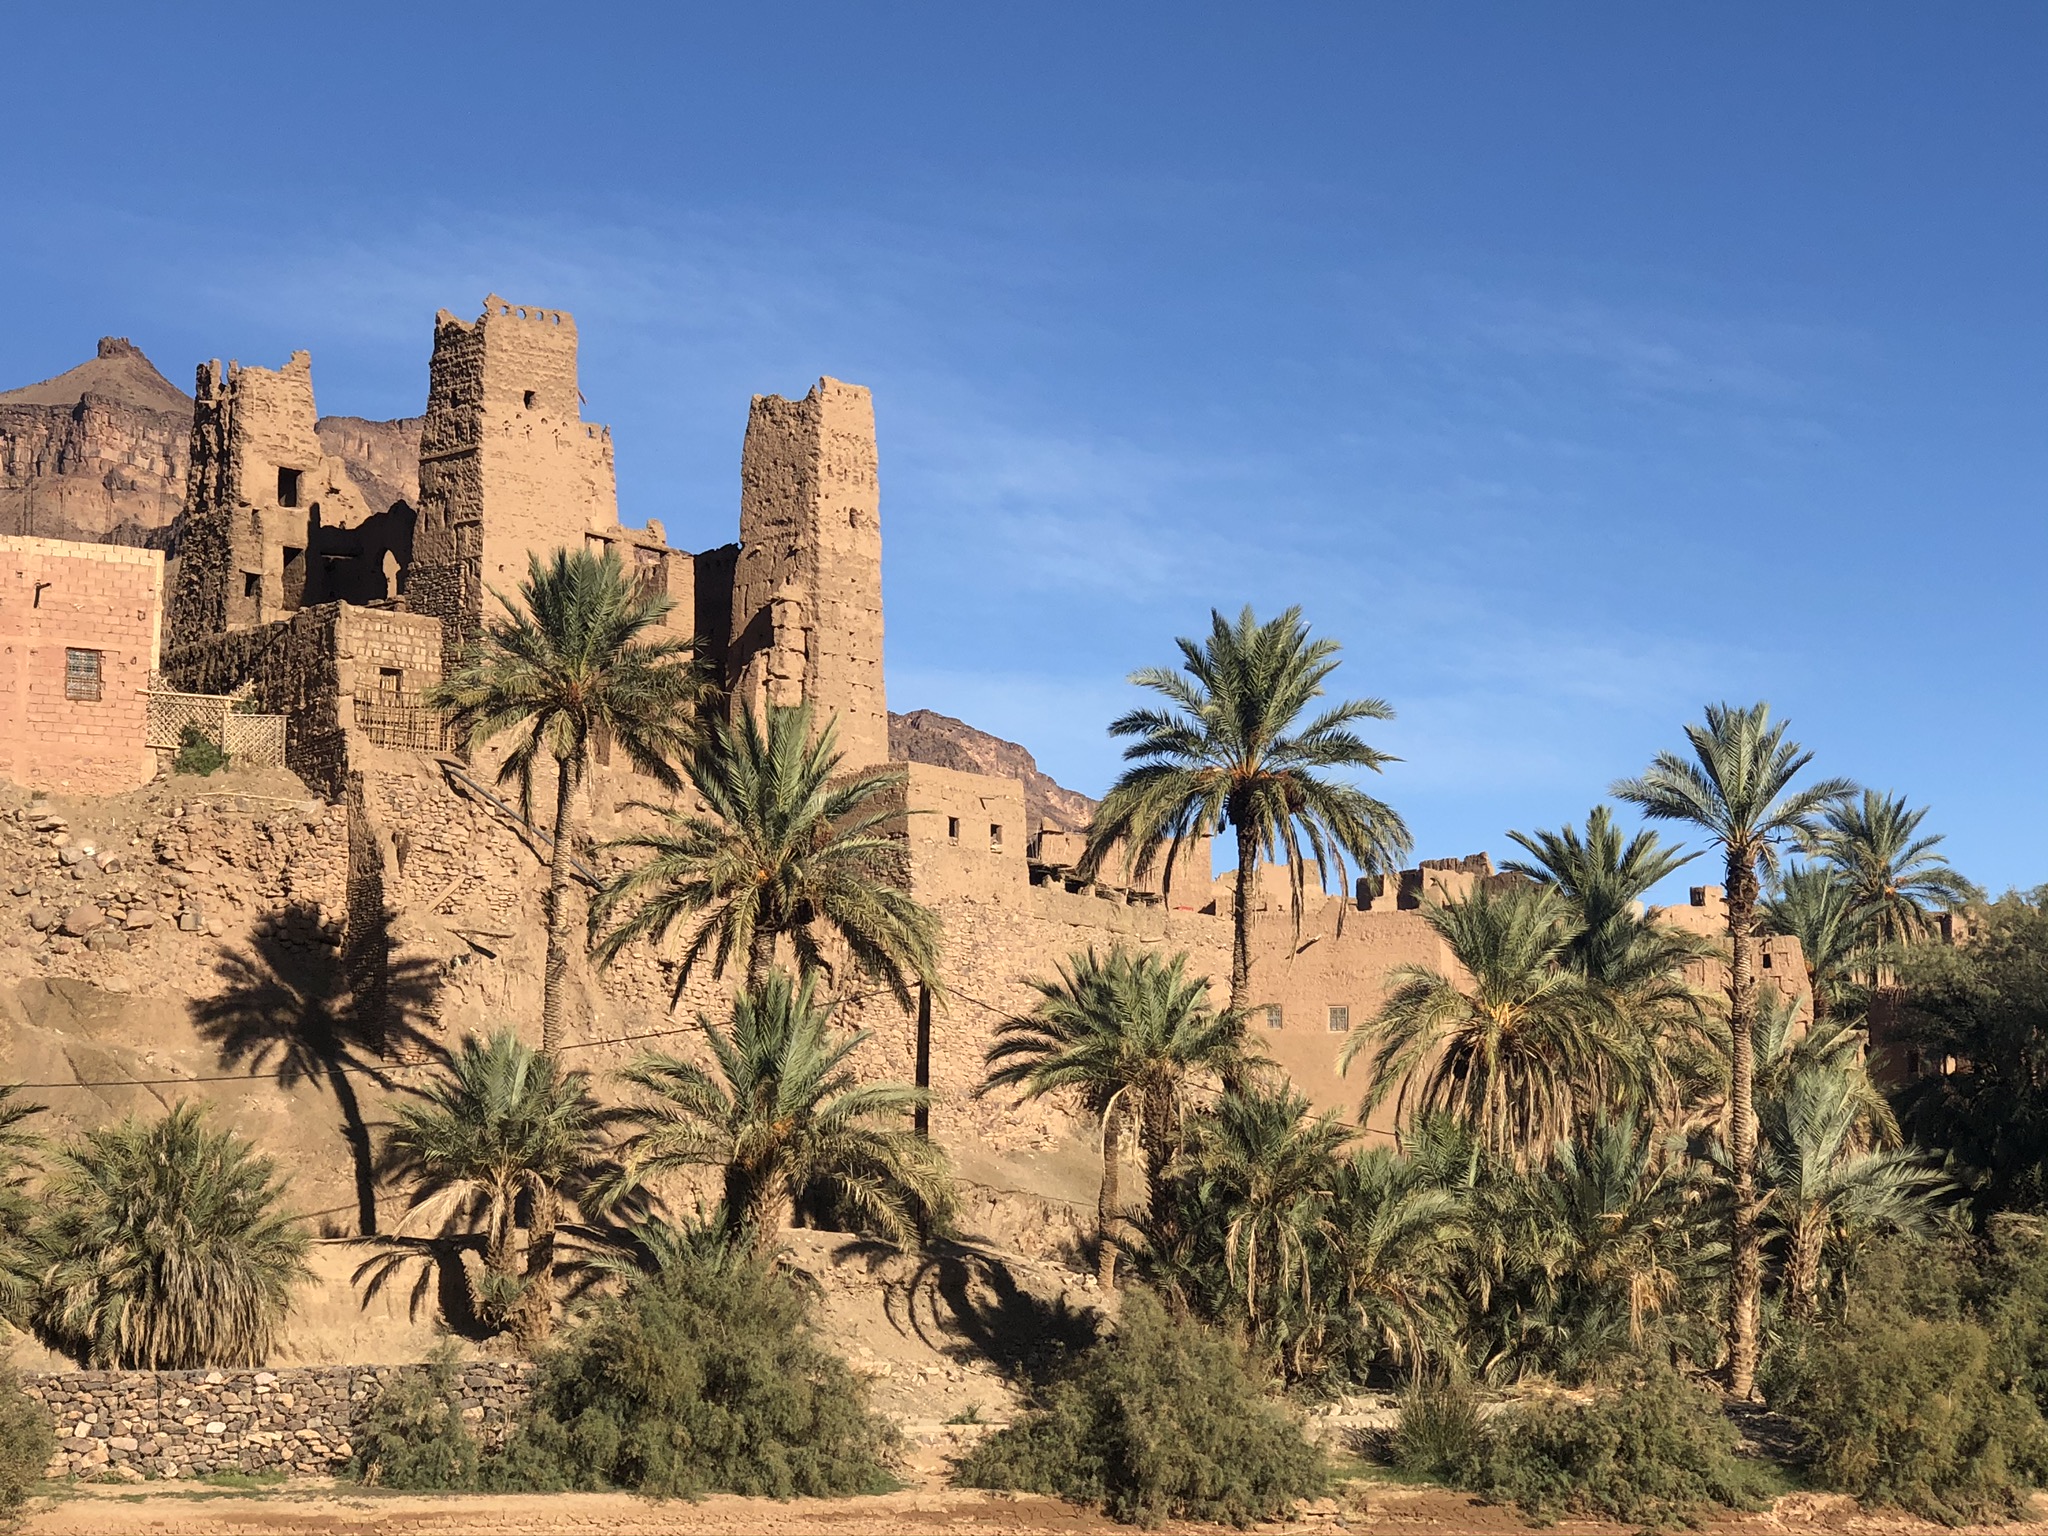 Full day trip from Ouarzazate to Zagora